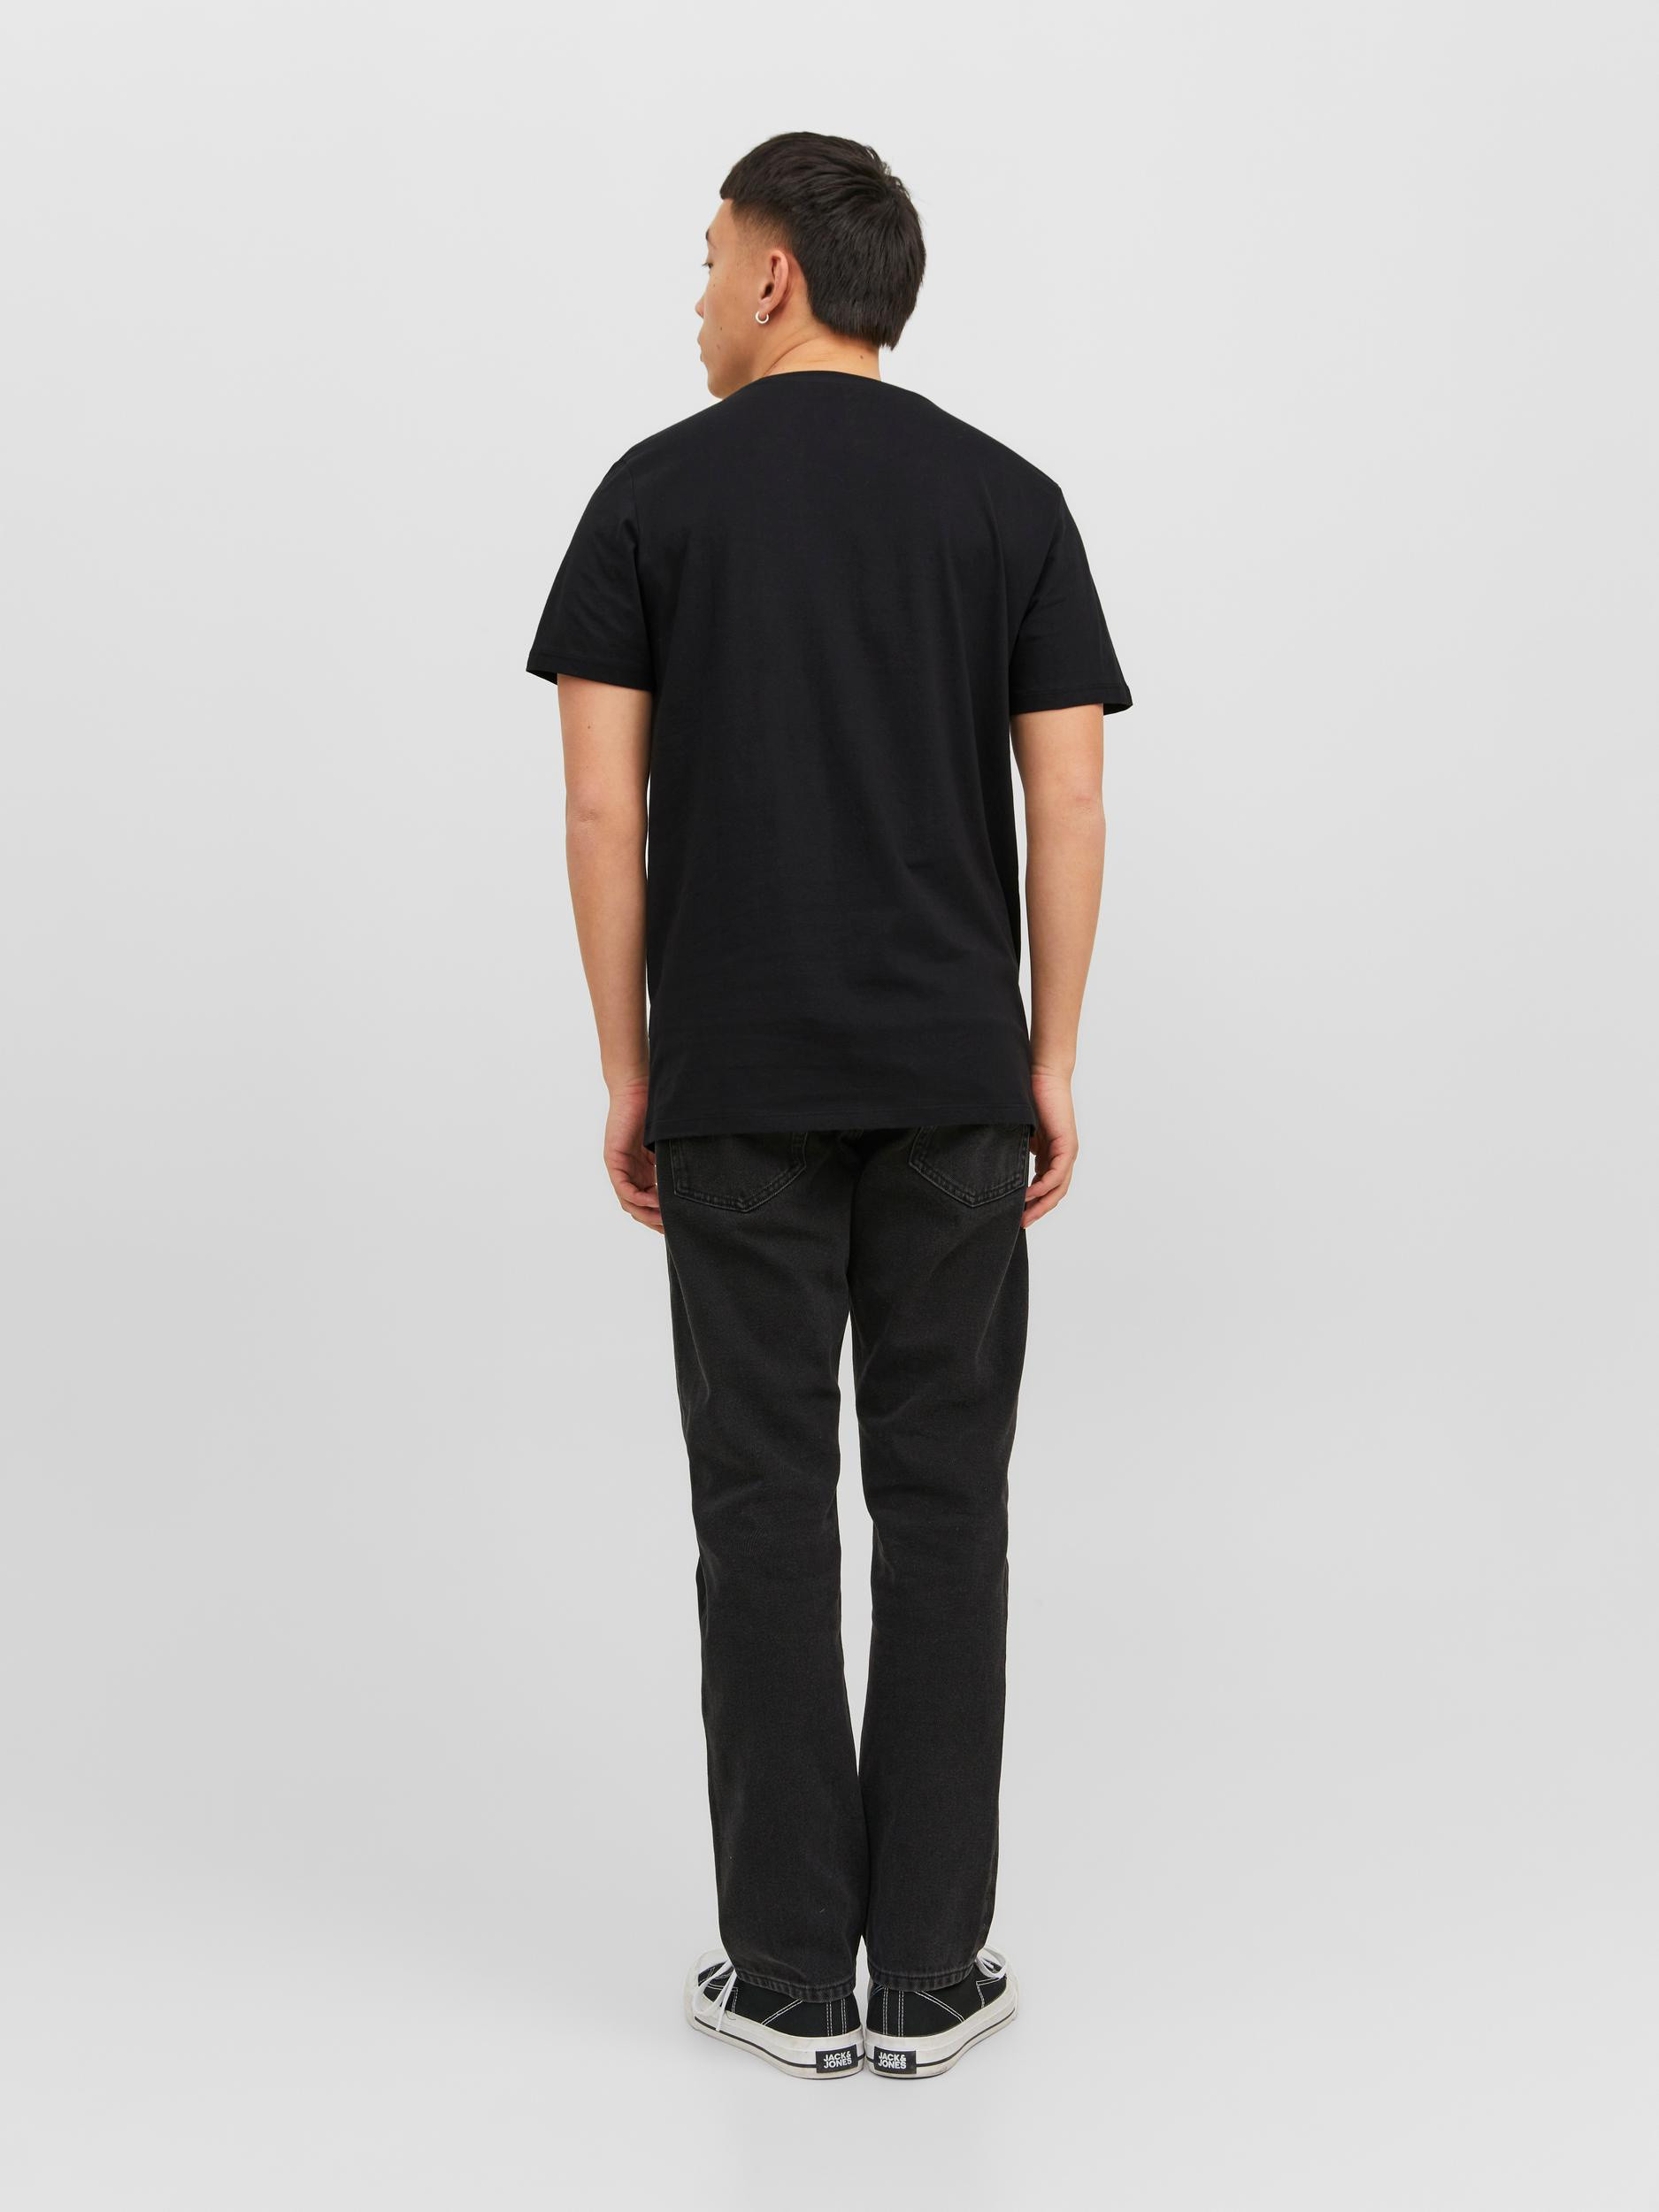 Jack & Jones -Cotton T-shirt with print, Black, large image number 2